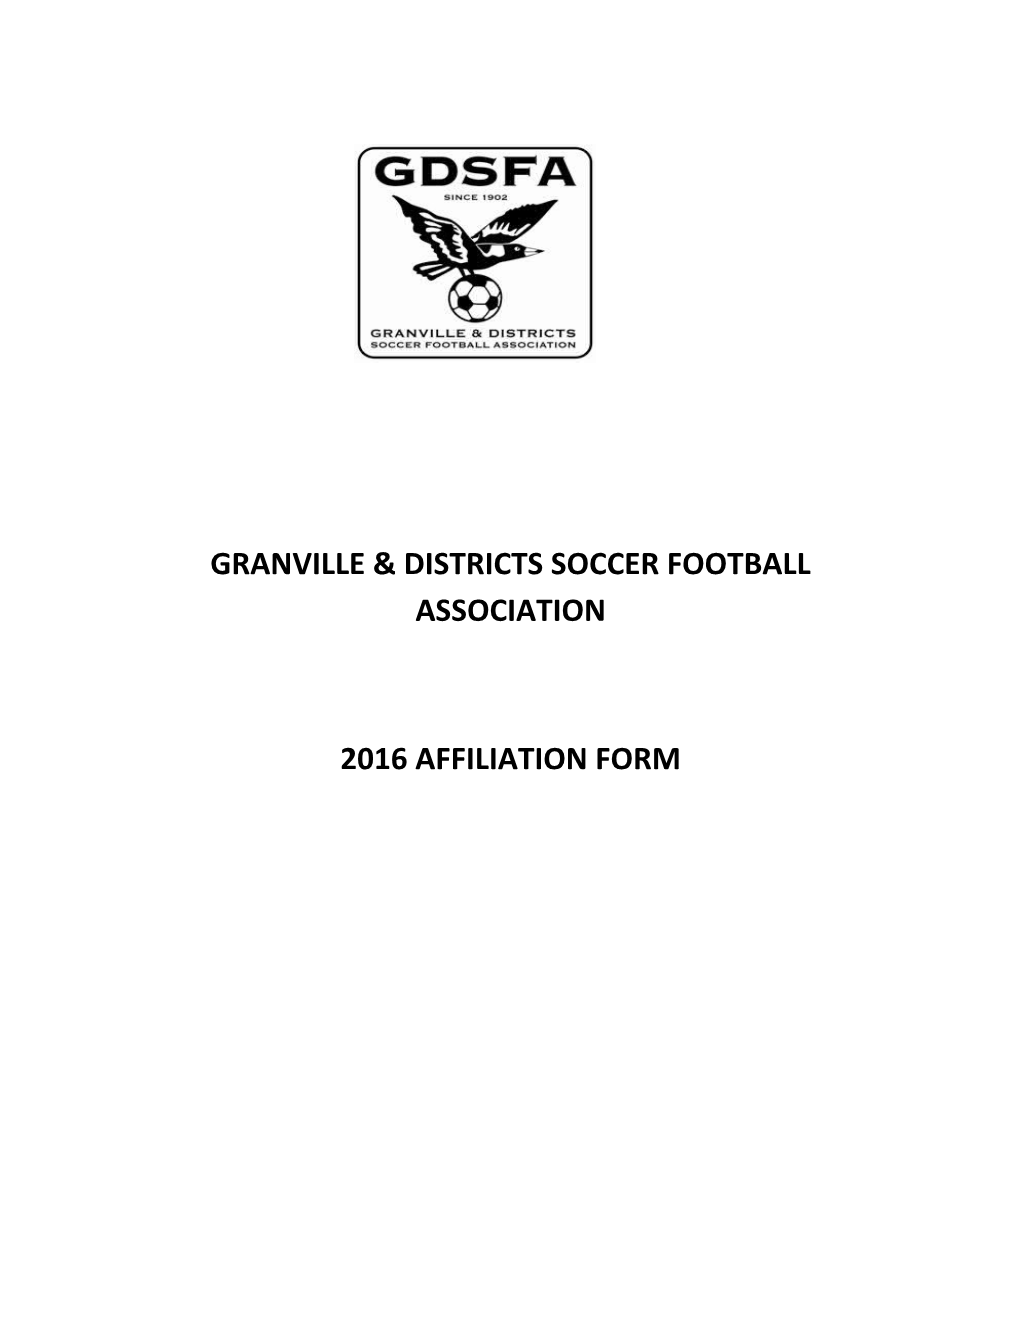 Granville & Districts Soccer Football Association